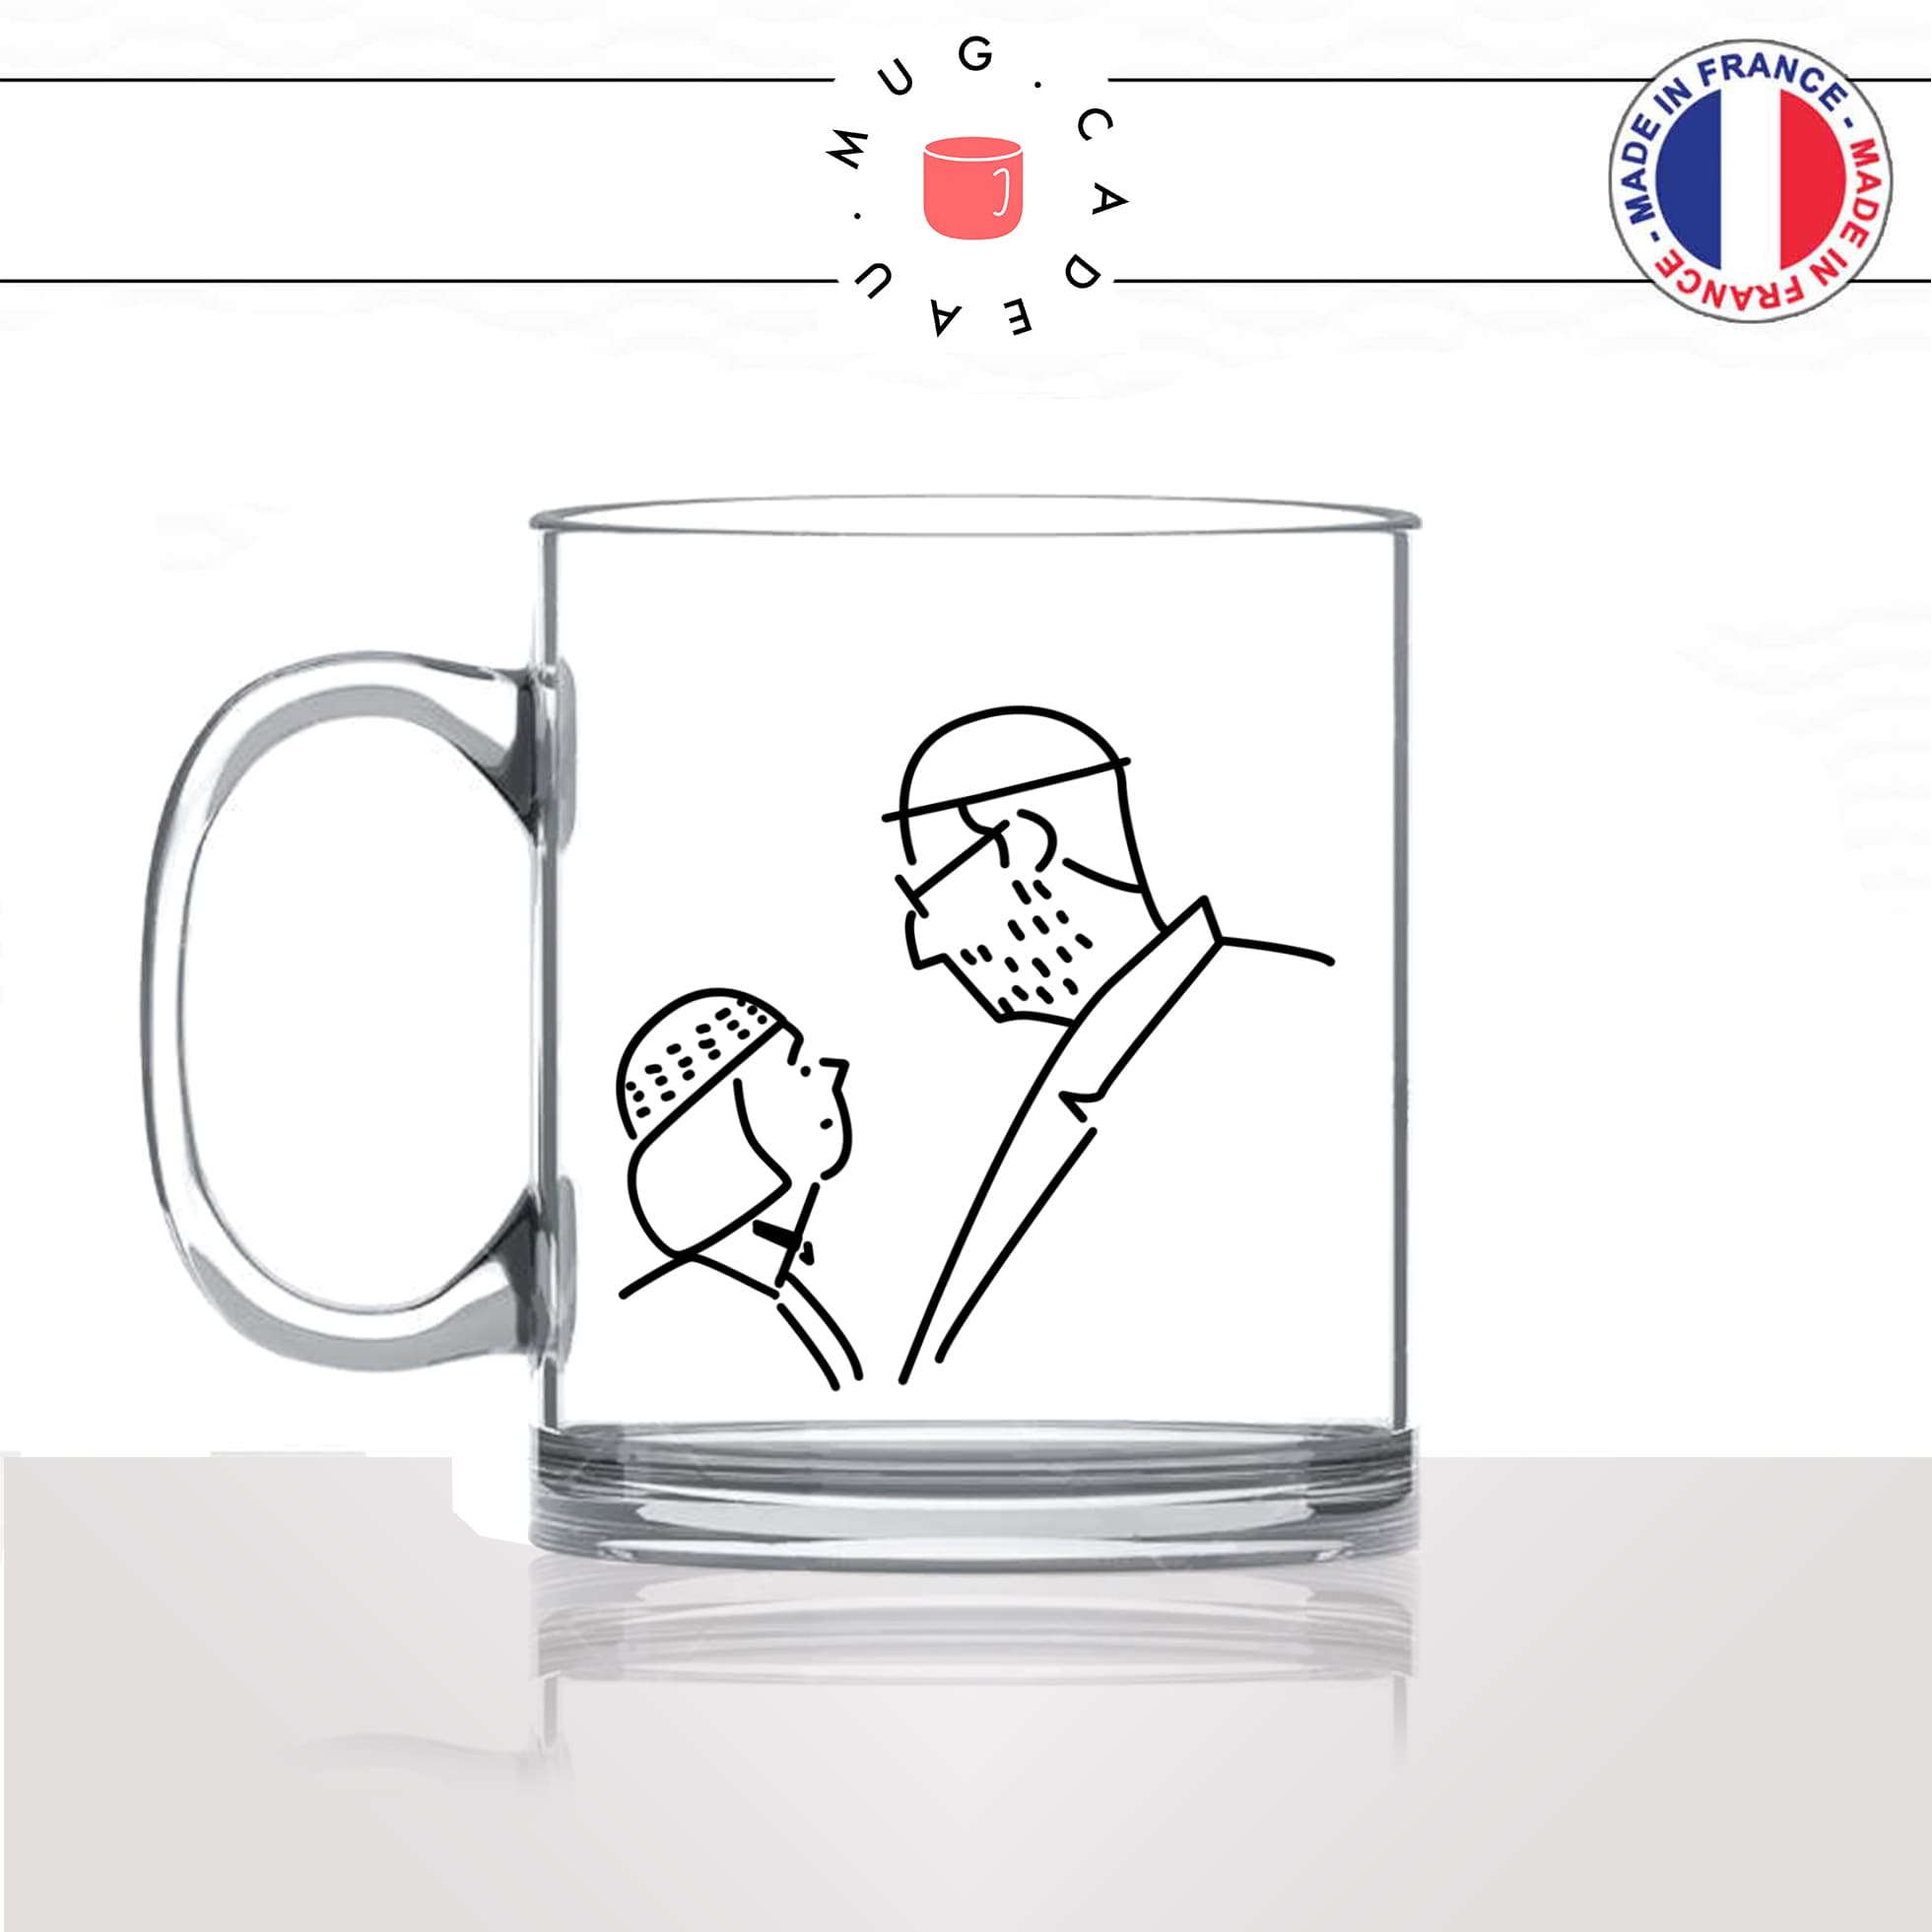 mug-tasse-en-verre-transparent-glass-film-francais-leon-jean-renaud-culte-france-dessin-fancinema-idée-cadeau-fun-cool-café-thé